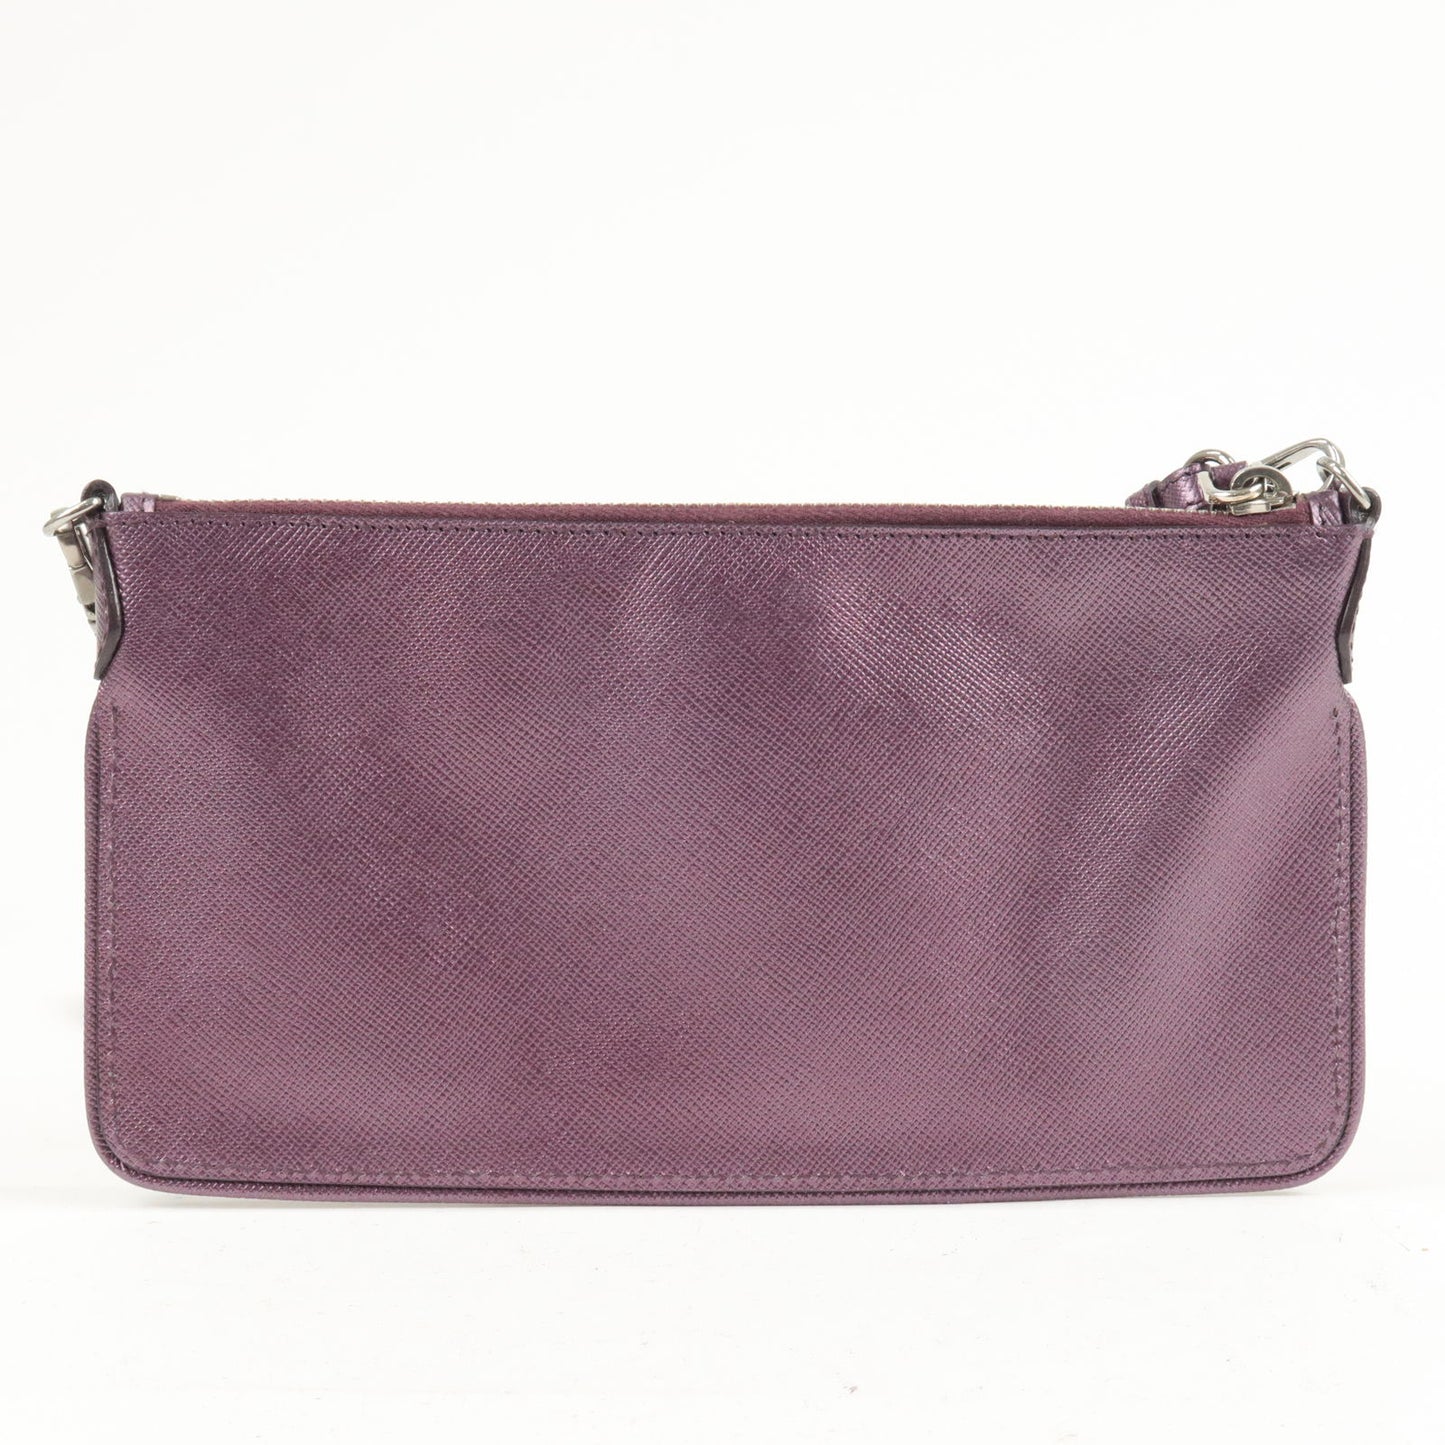 Prada Leather 2 Way Shoulder Bag Pouch Purple